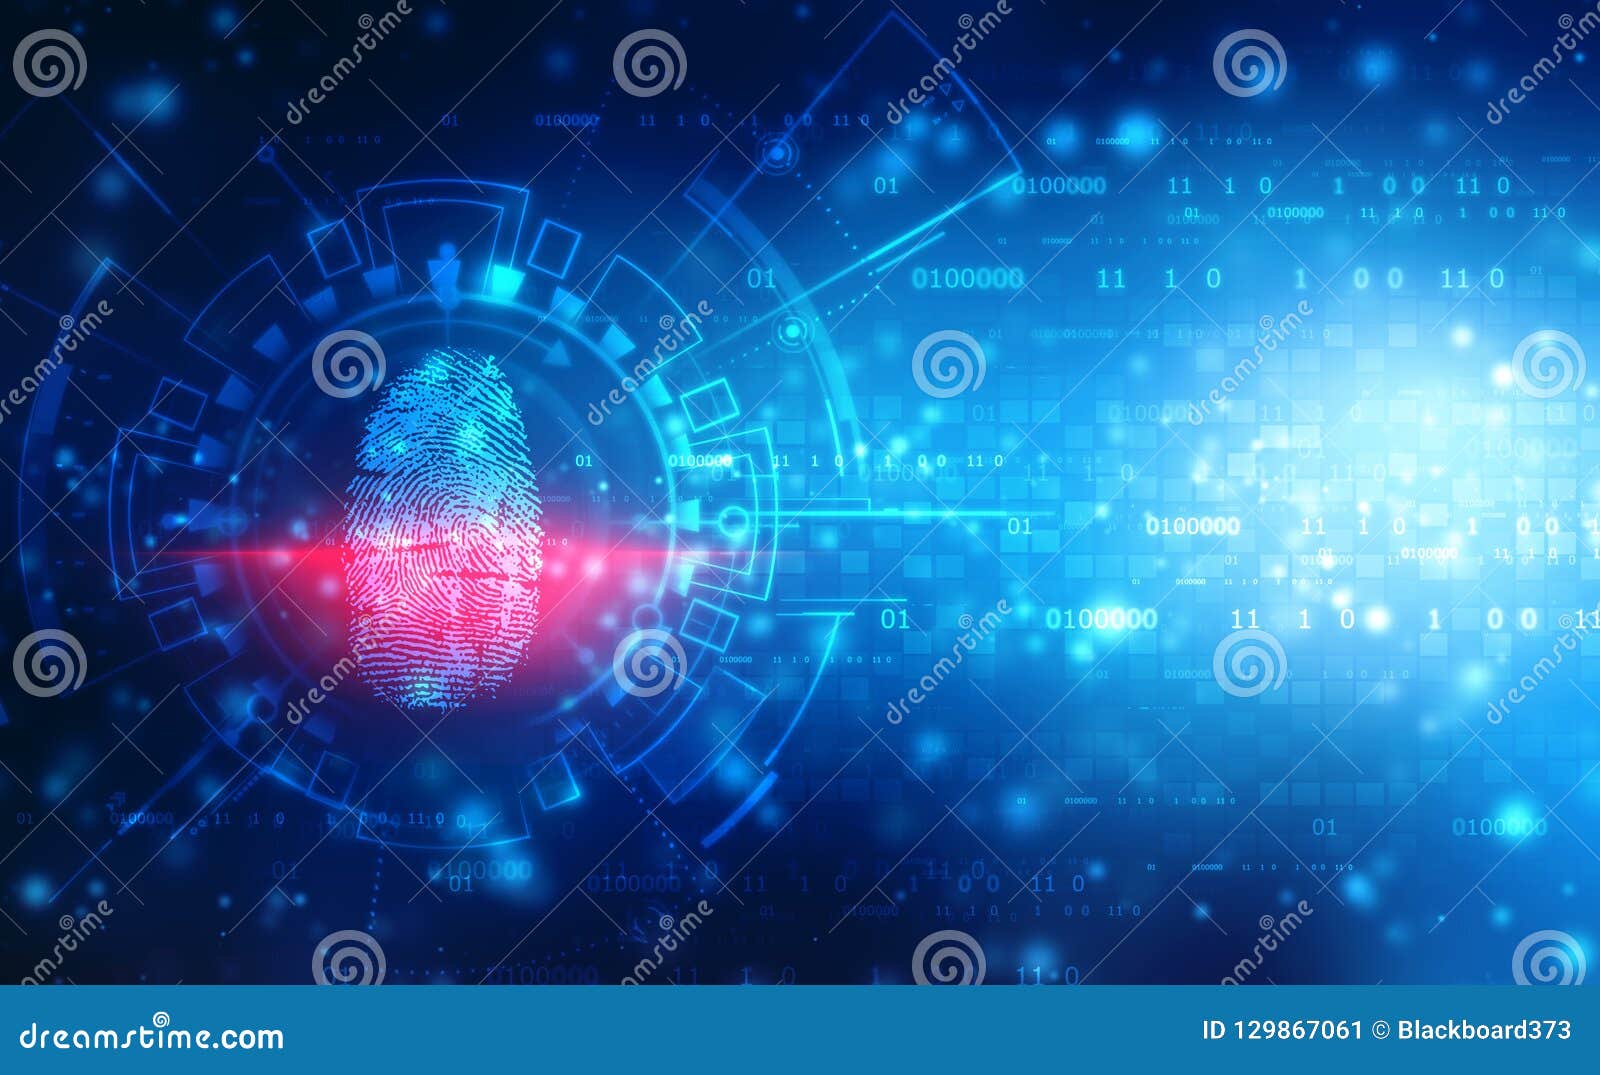 security concept, fingerprint scanning on digital screen. cyber security concept